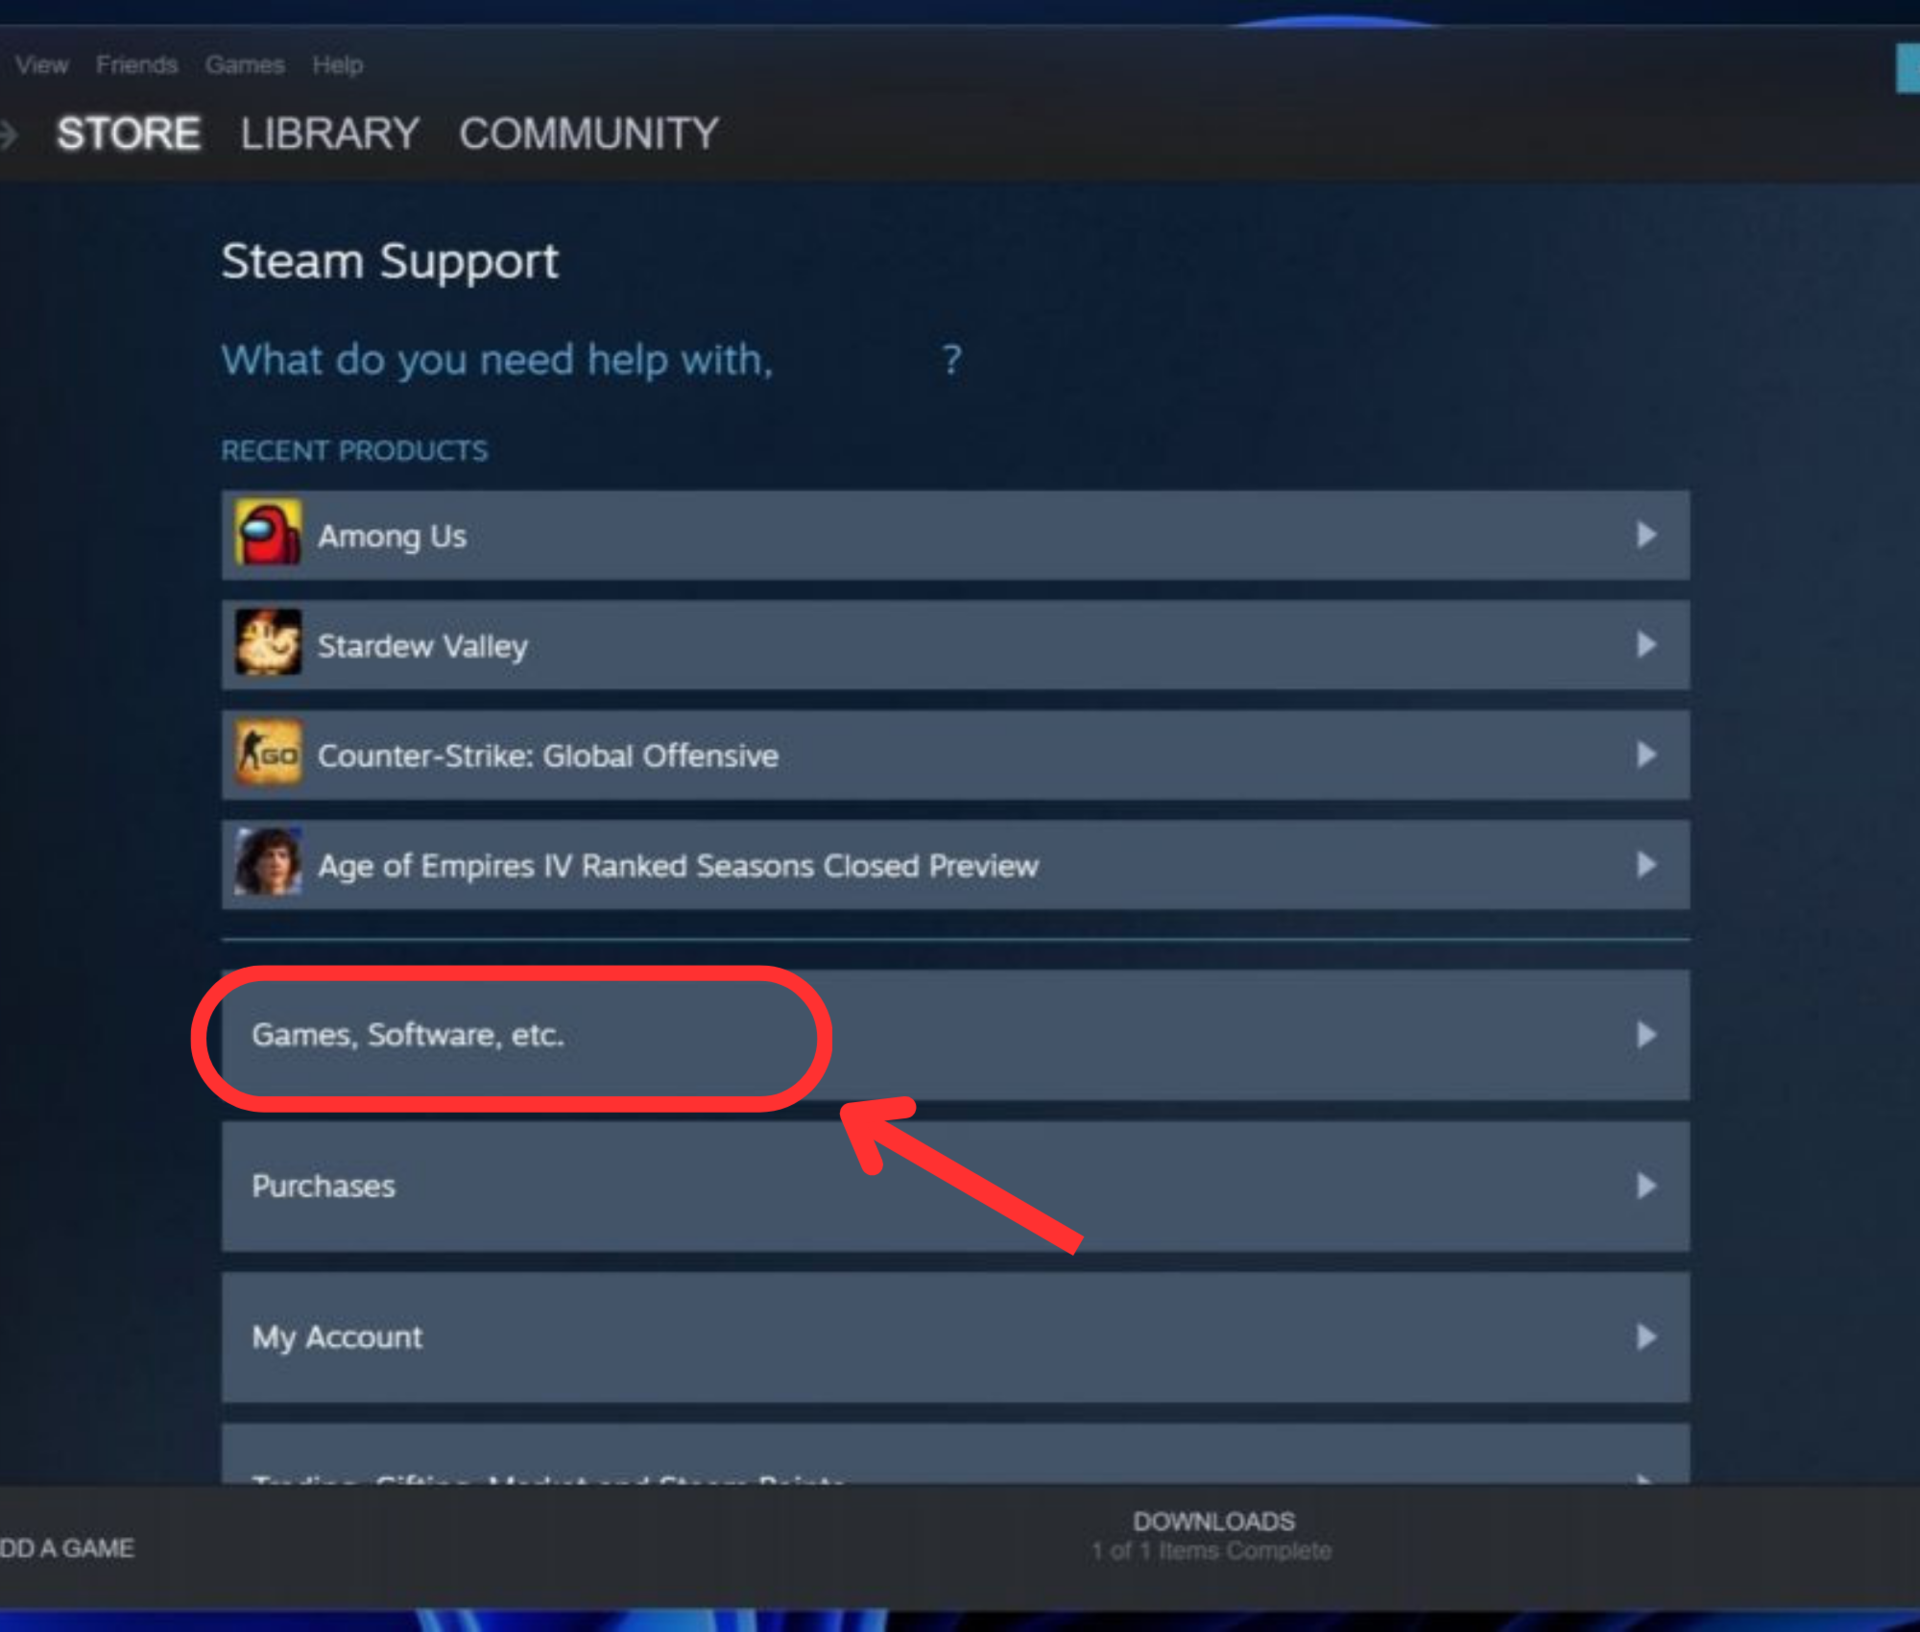 steam support games softwares etc. button